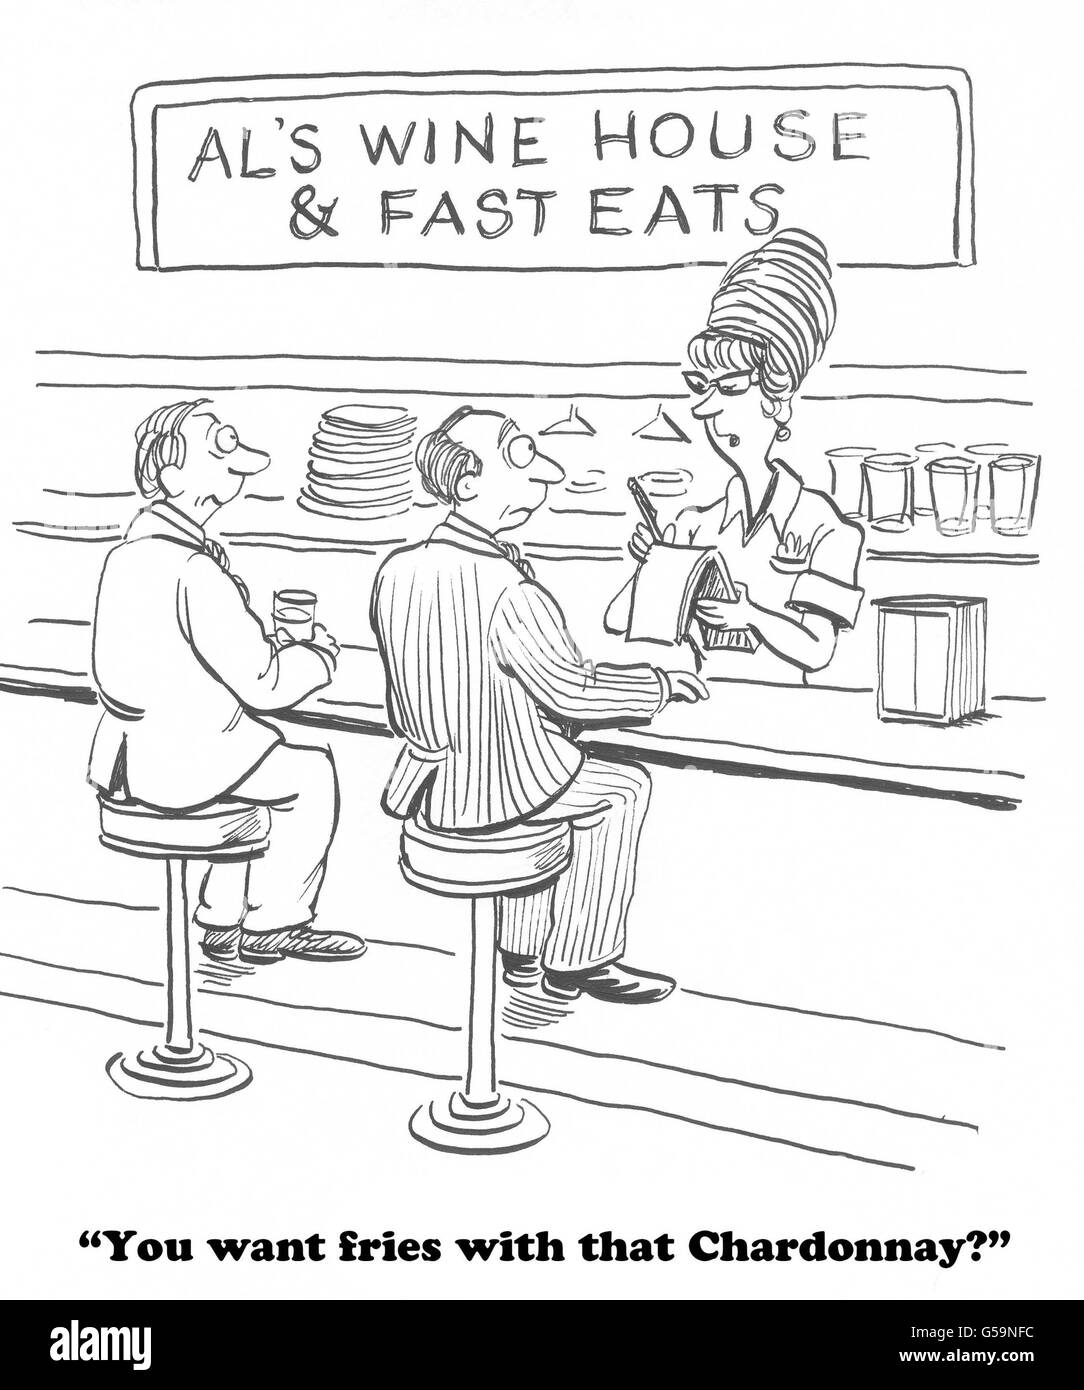 Cartoon about a fine wine establishment that serves fast food. Stock Photo